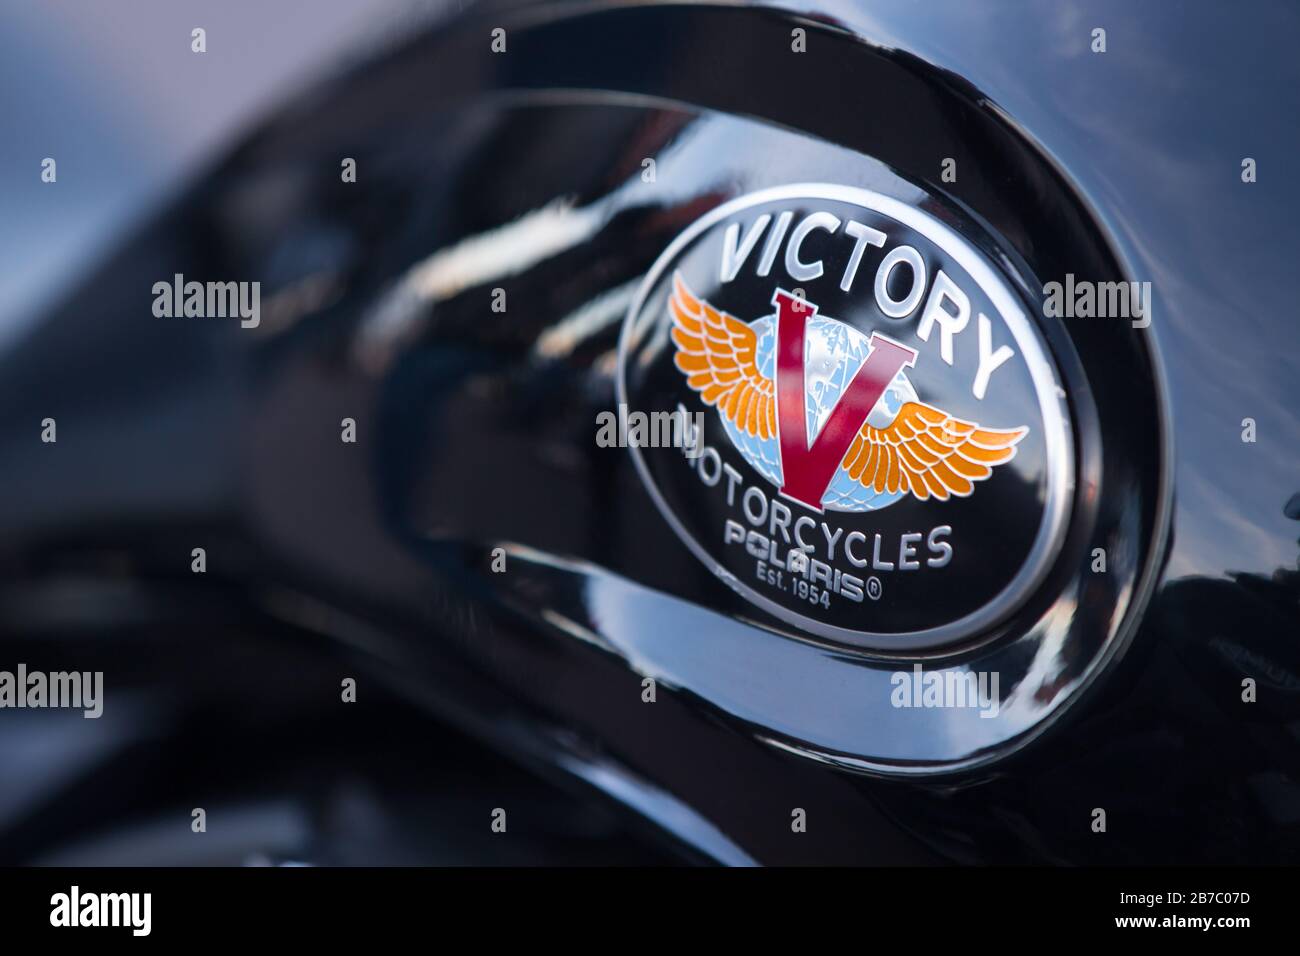 Victory Motorcycles petrol tank badge. Stock Photo